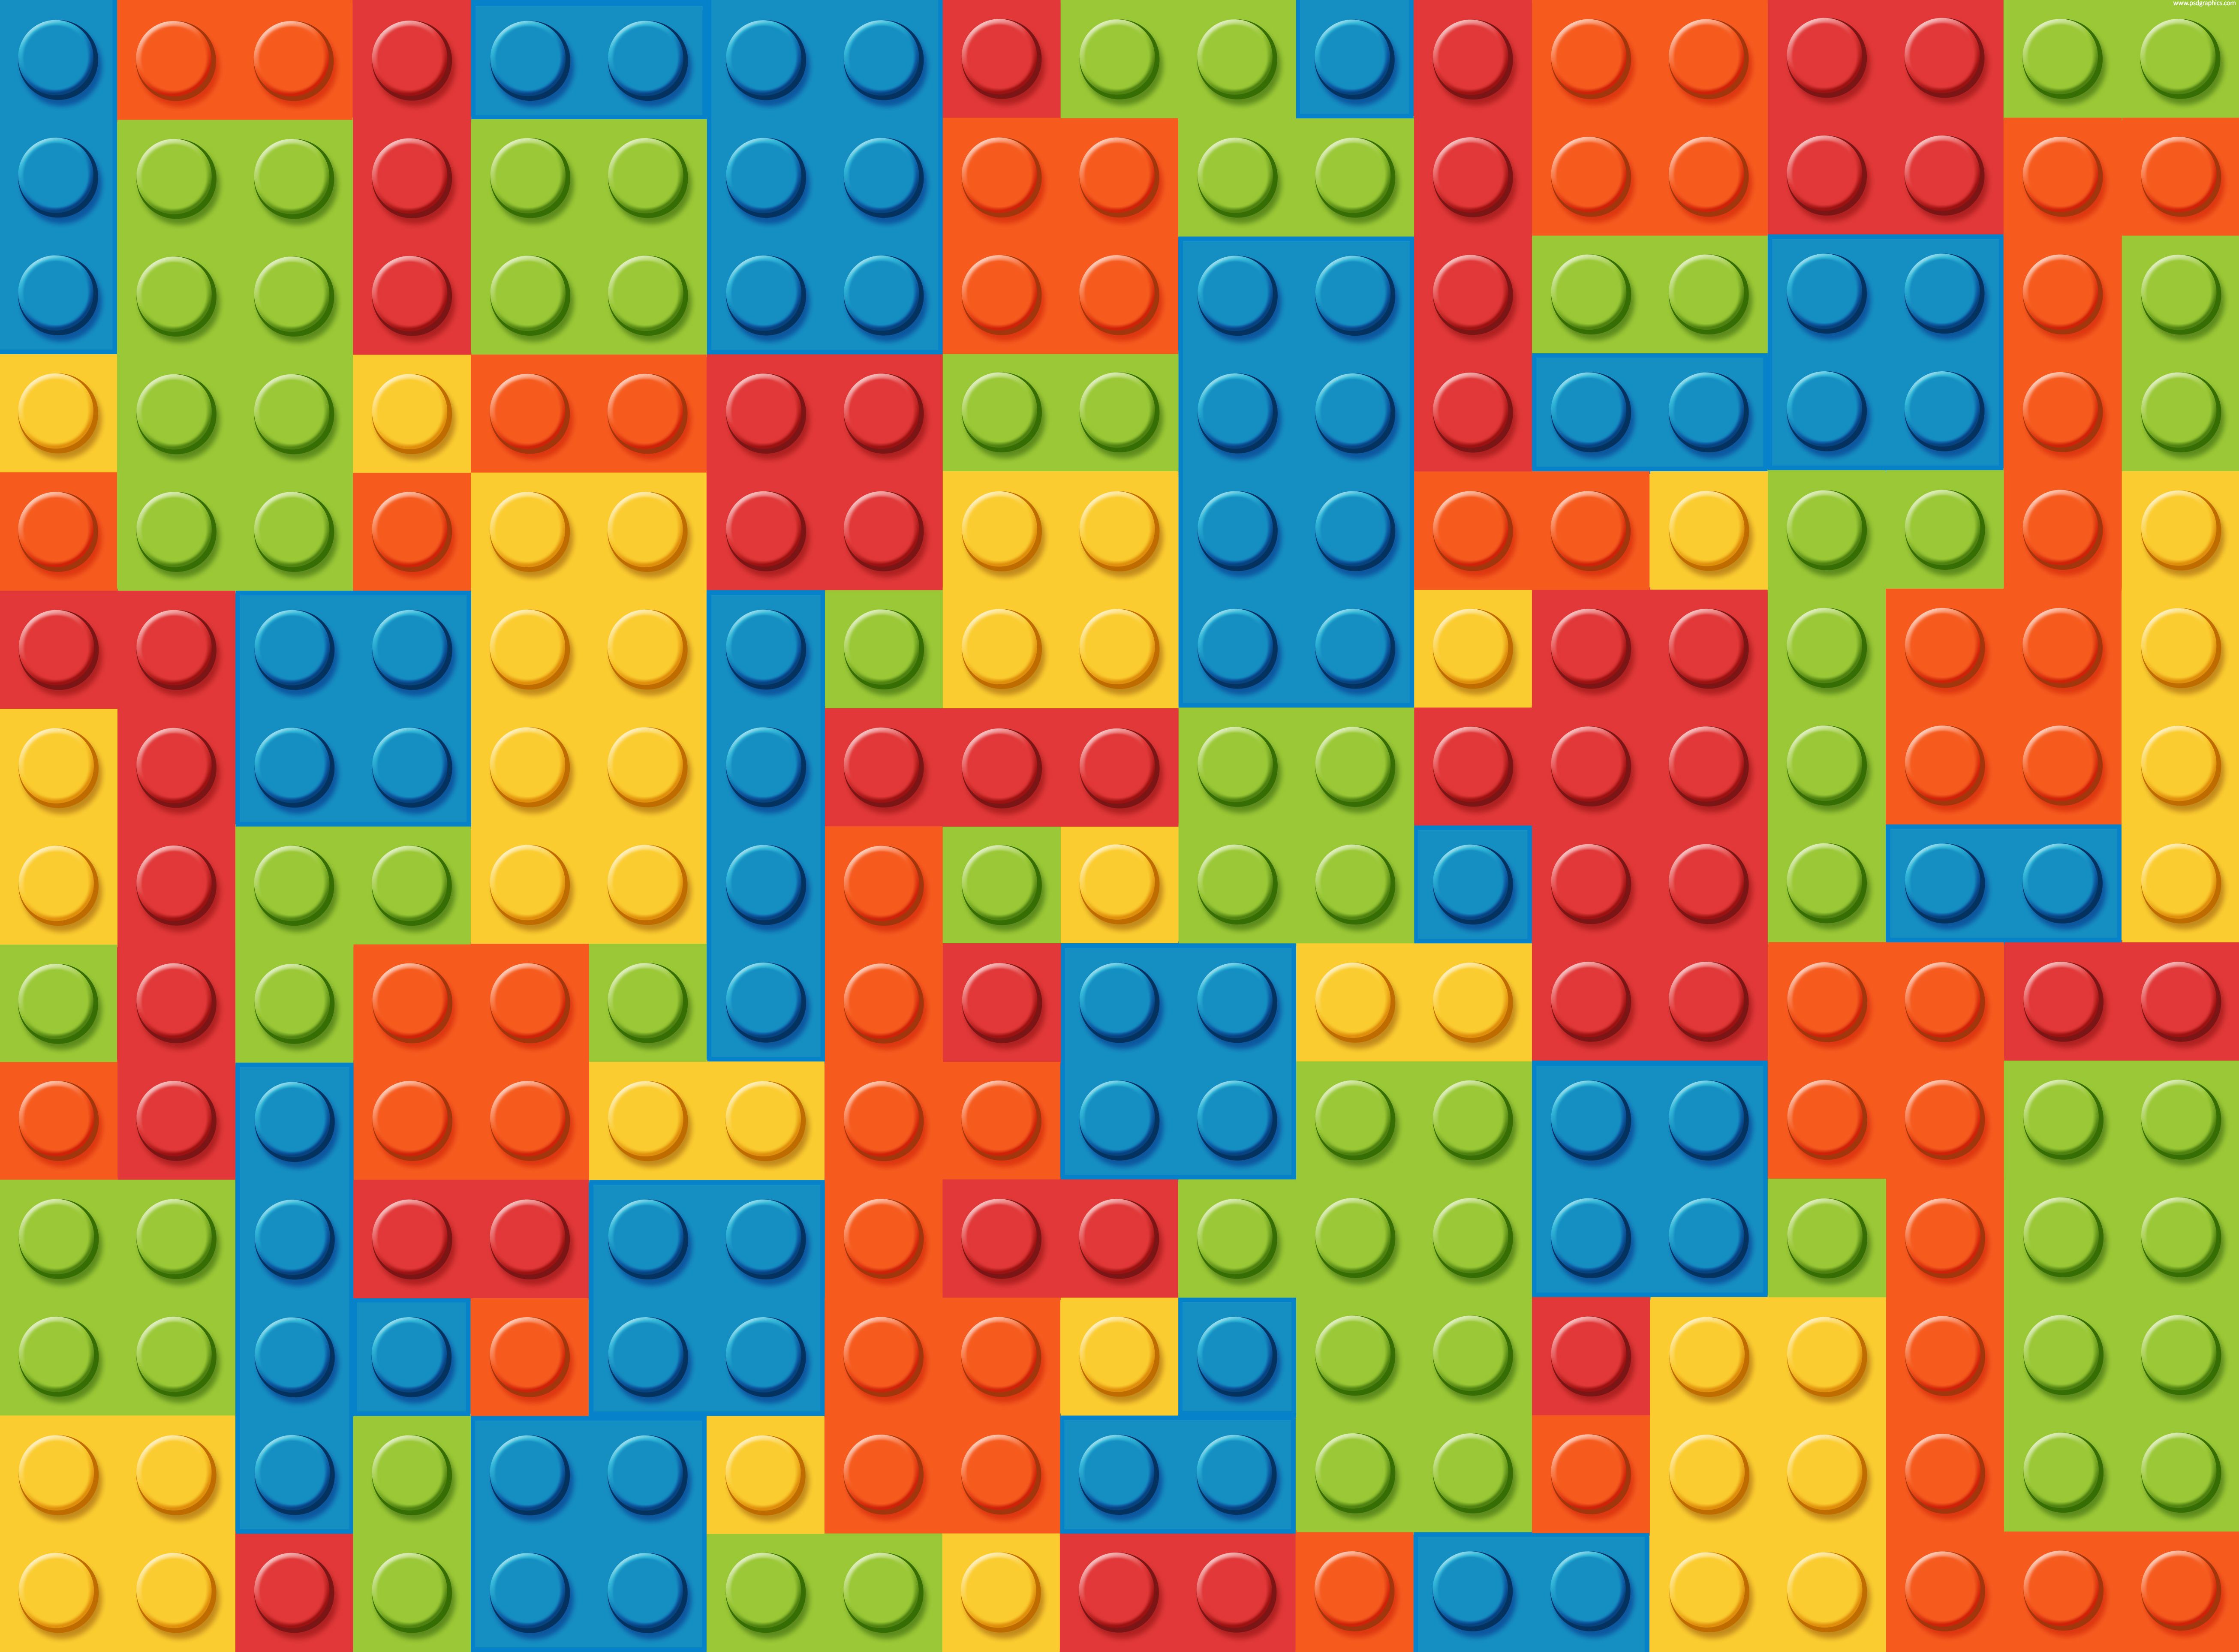 Lego bricks pattern | PSDGraphics